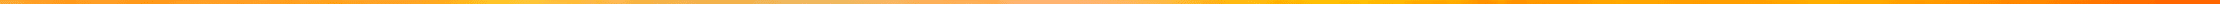 Orange watercolor dividing line 